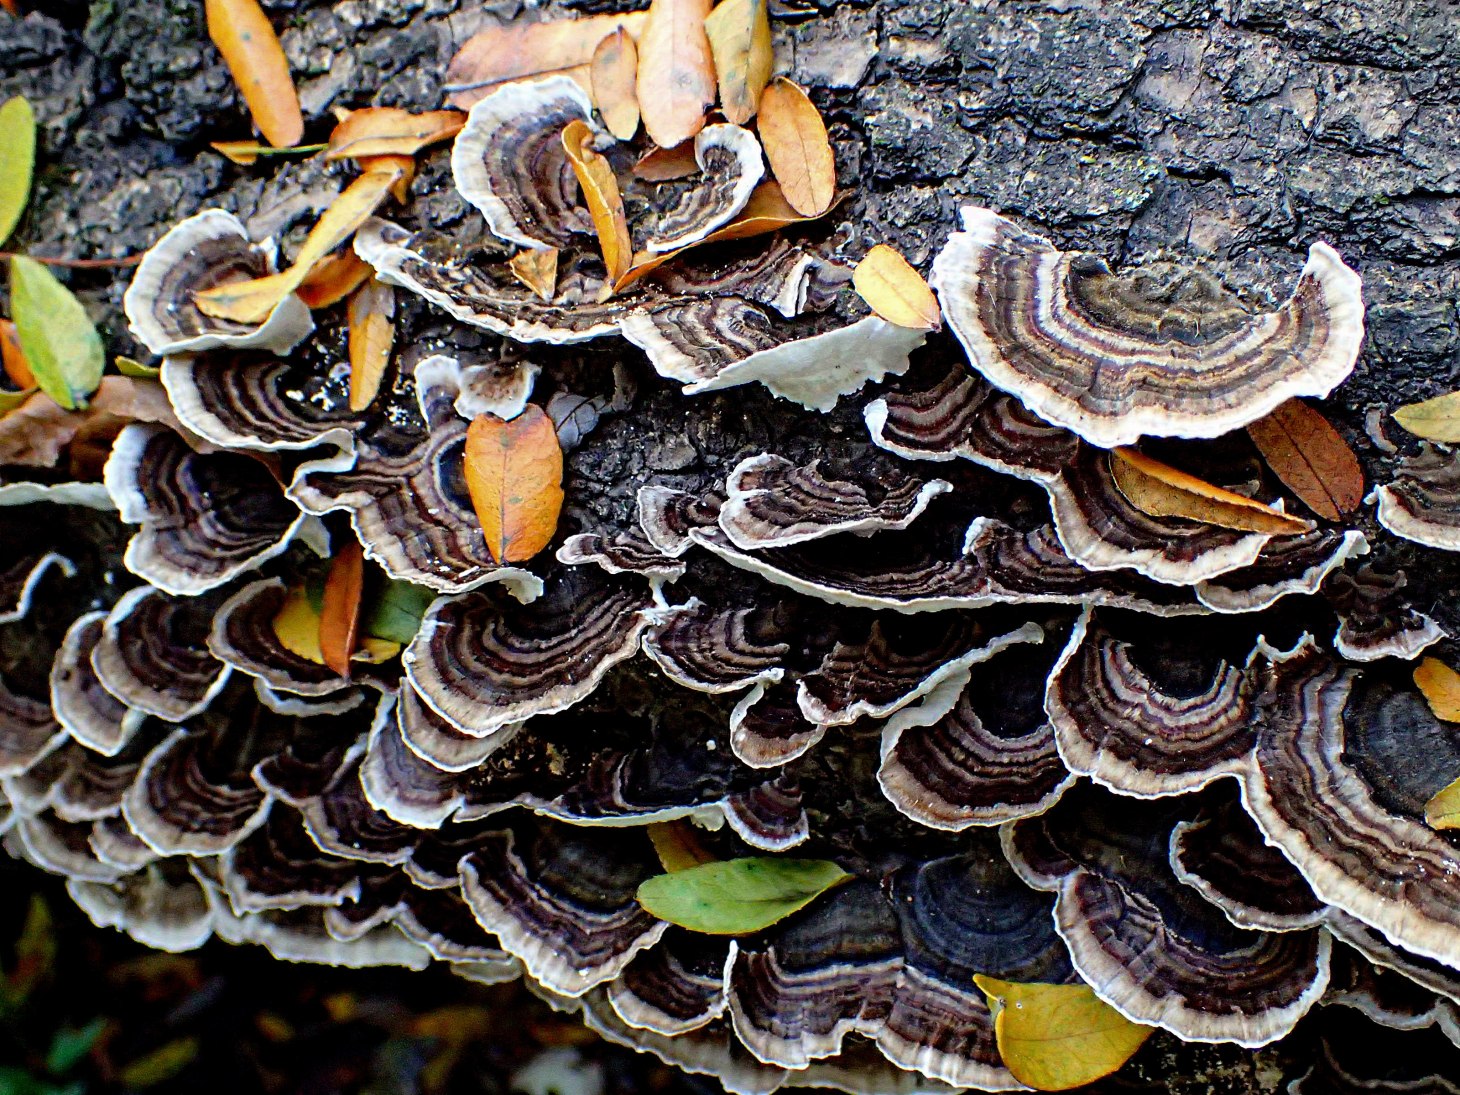 Some Bracket Fungus among us!  Photo by Thomas Peace 2014